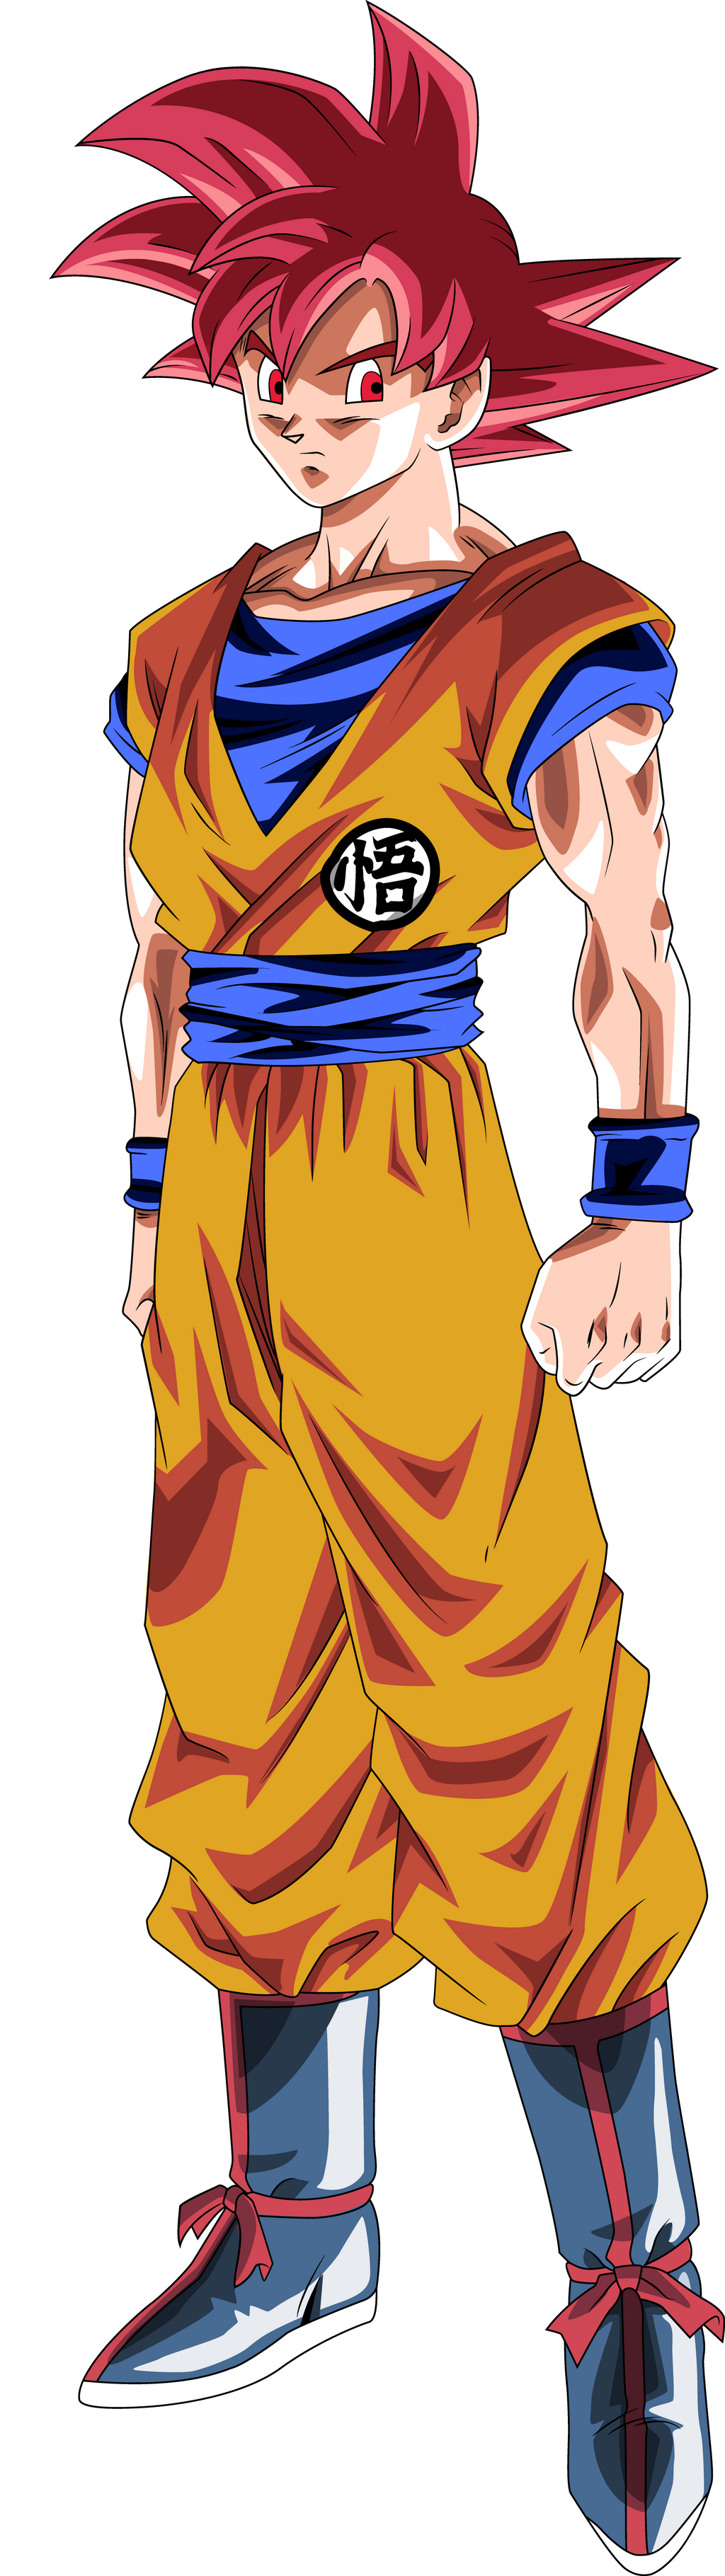 Render - Goku SSJ DIos - Vers 2014 by ShikoMT on DeviantArt